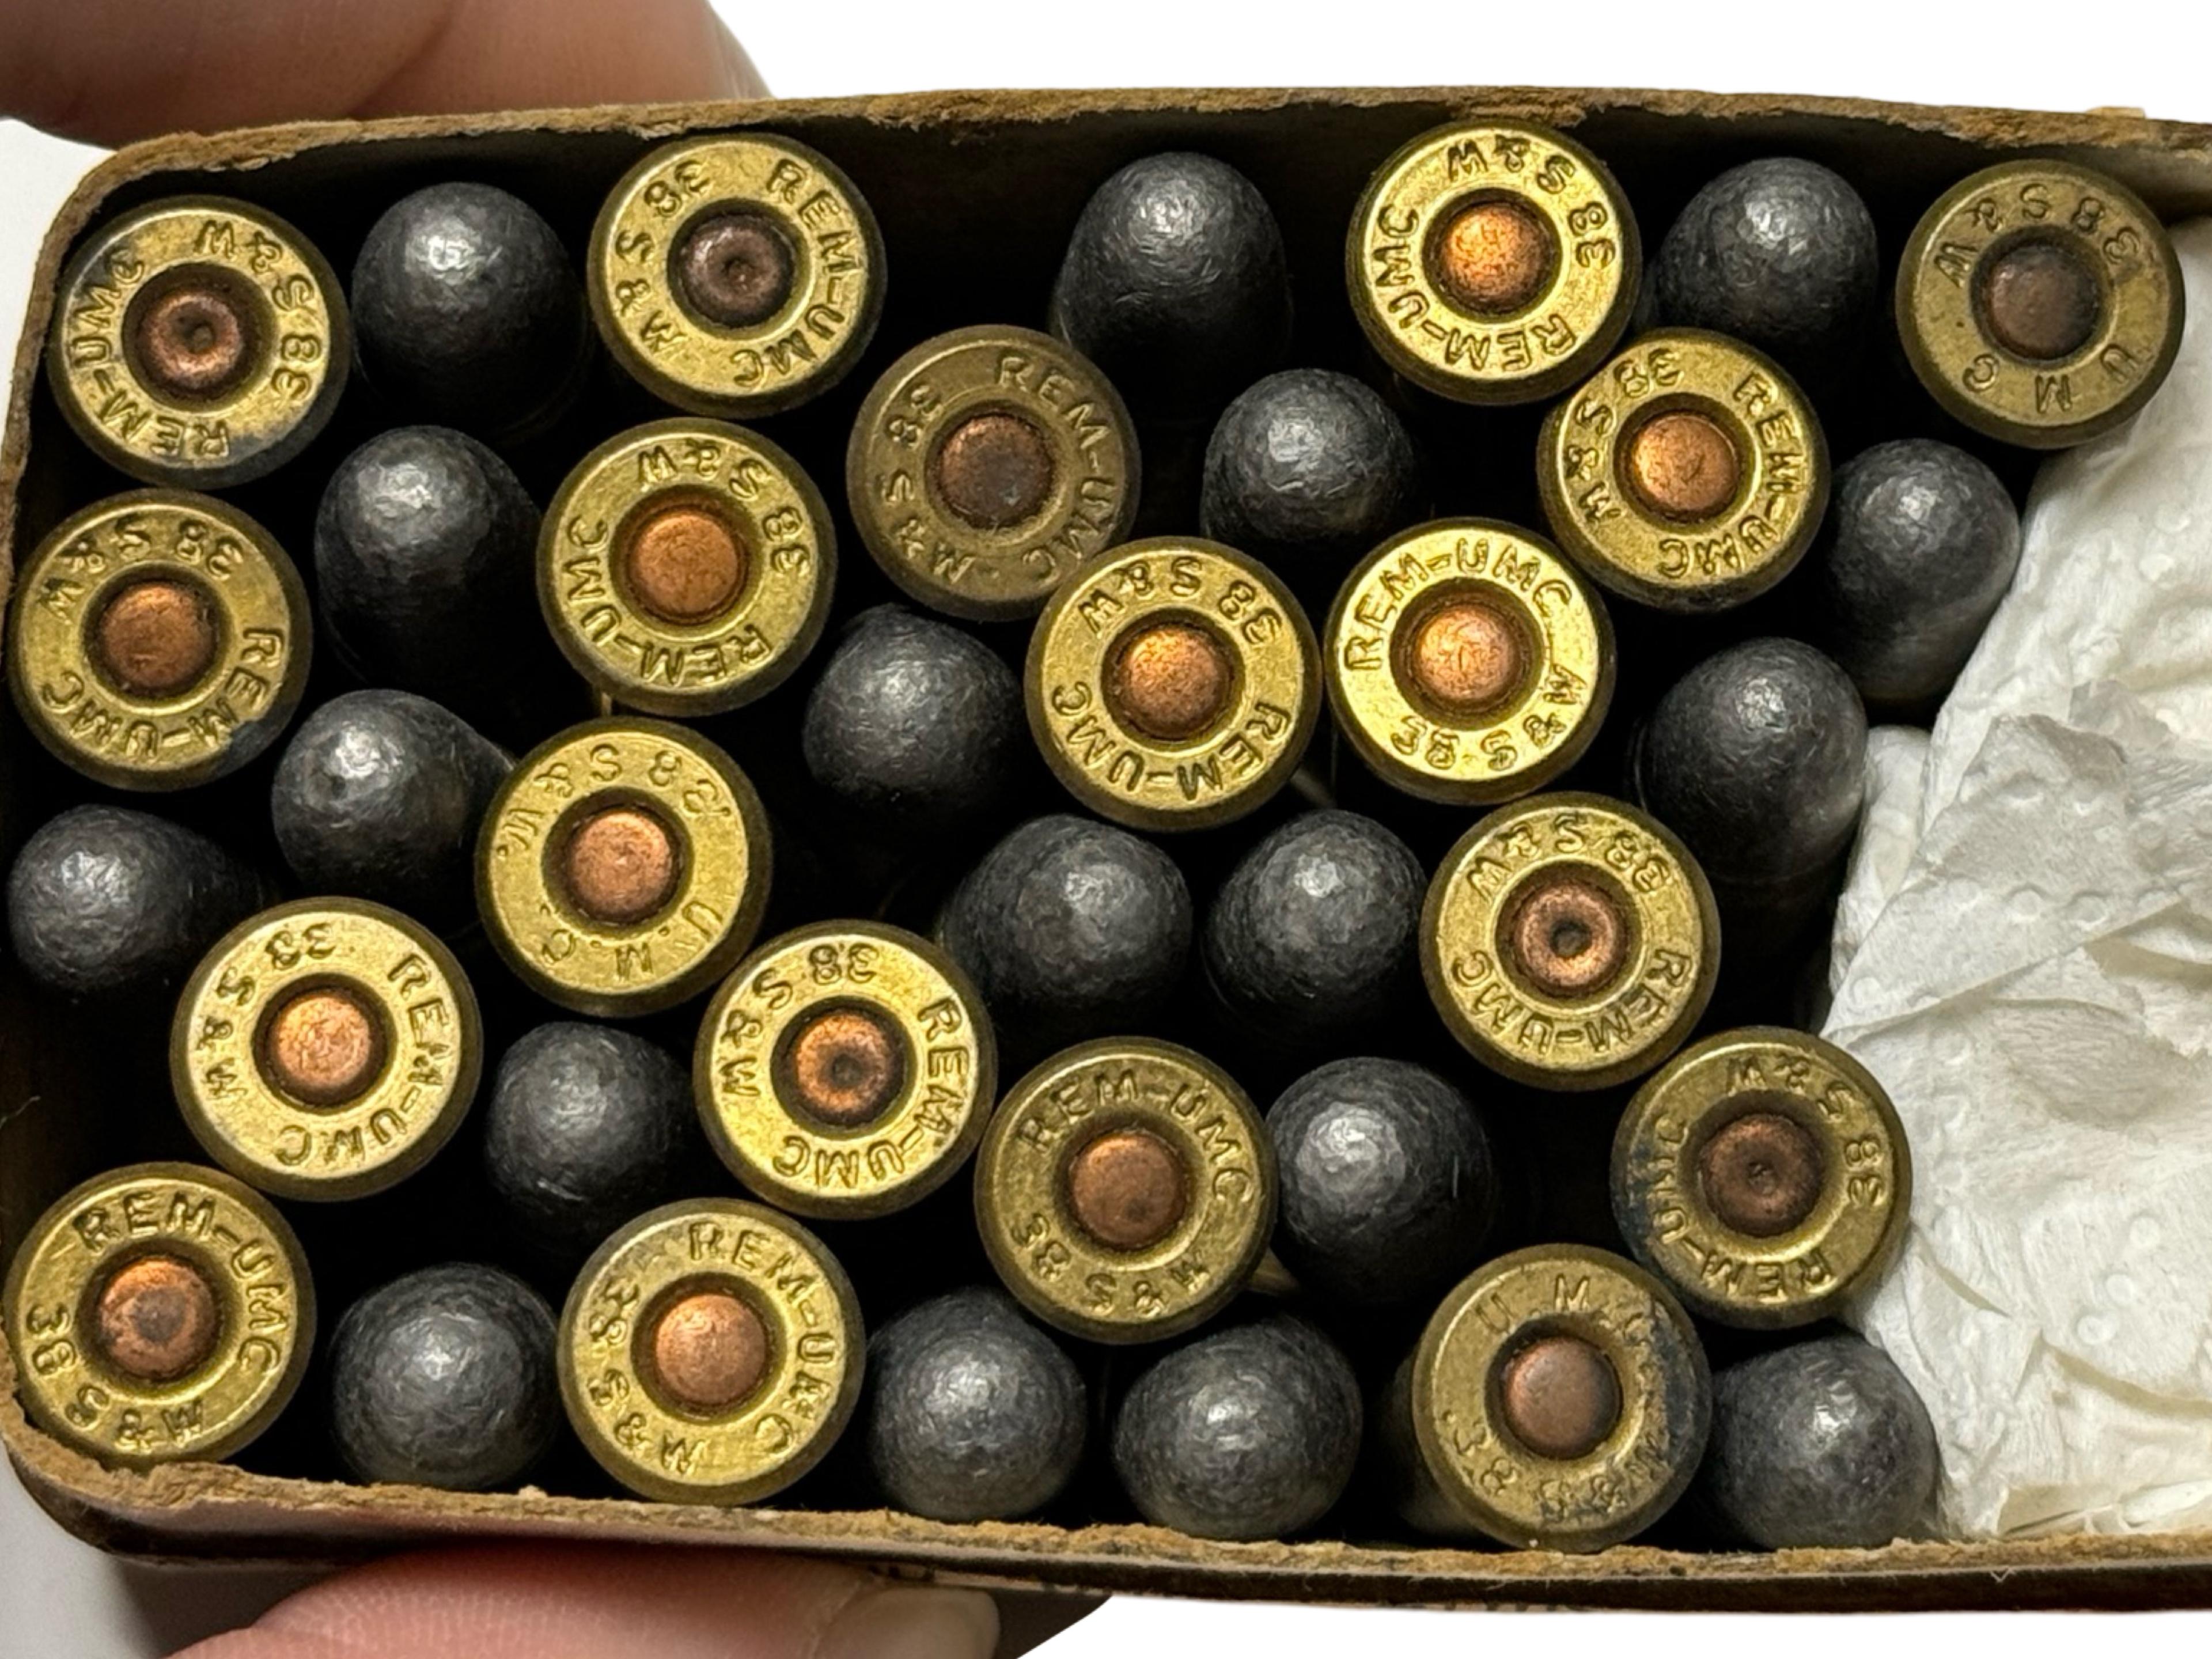 37rds. of .38 S&W Blackpowder Remington Ammunition in Box